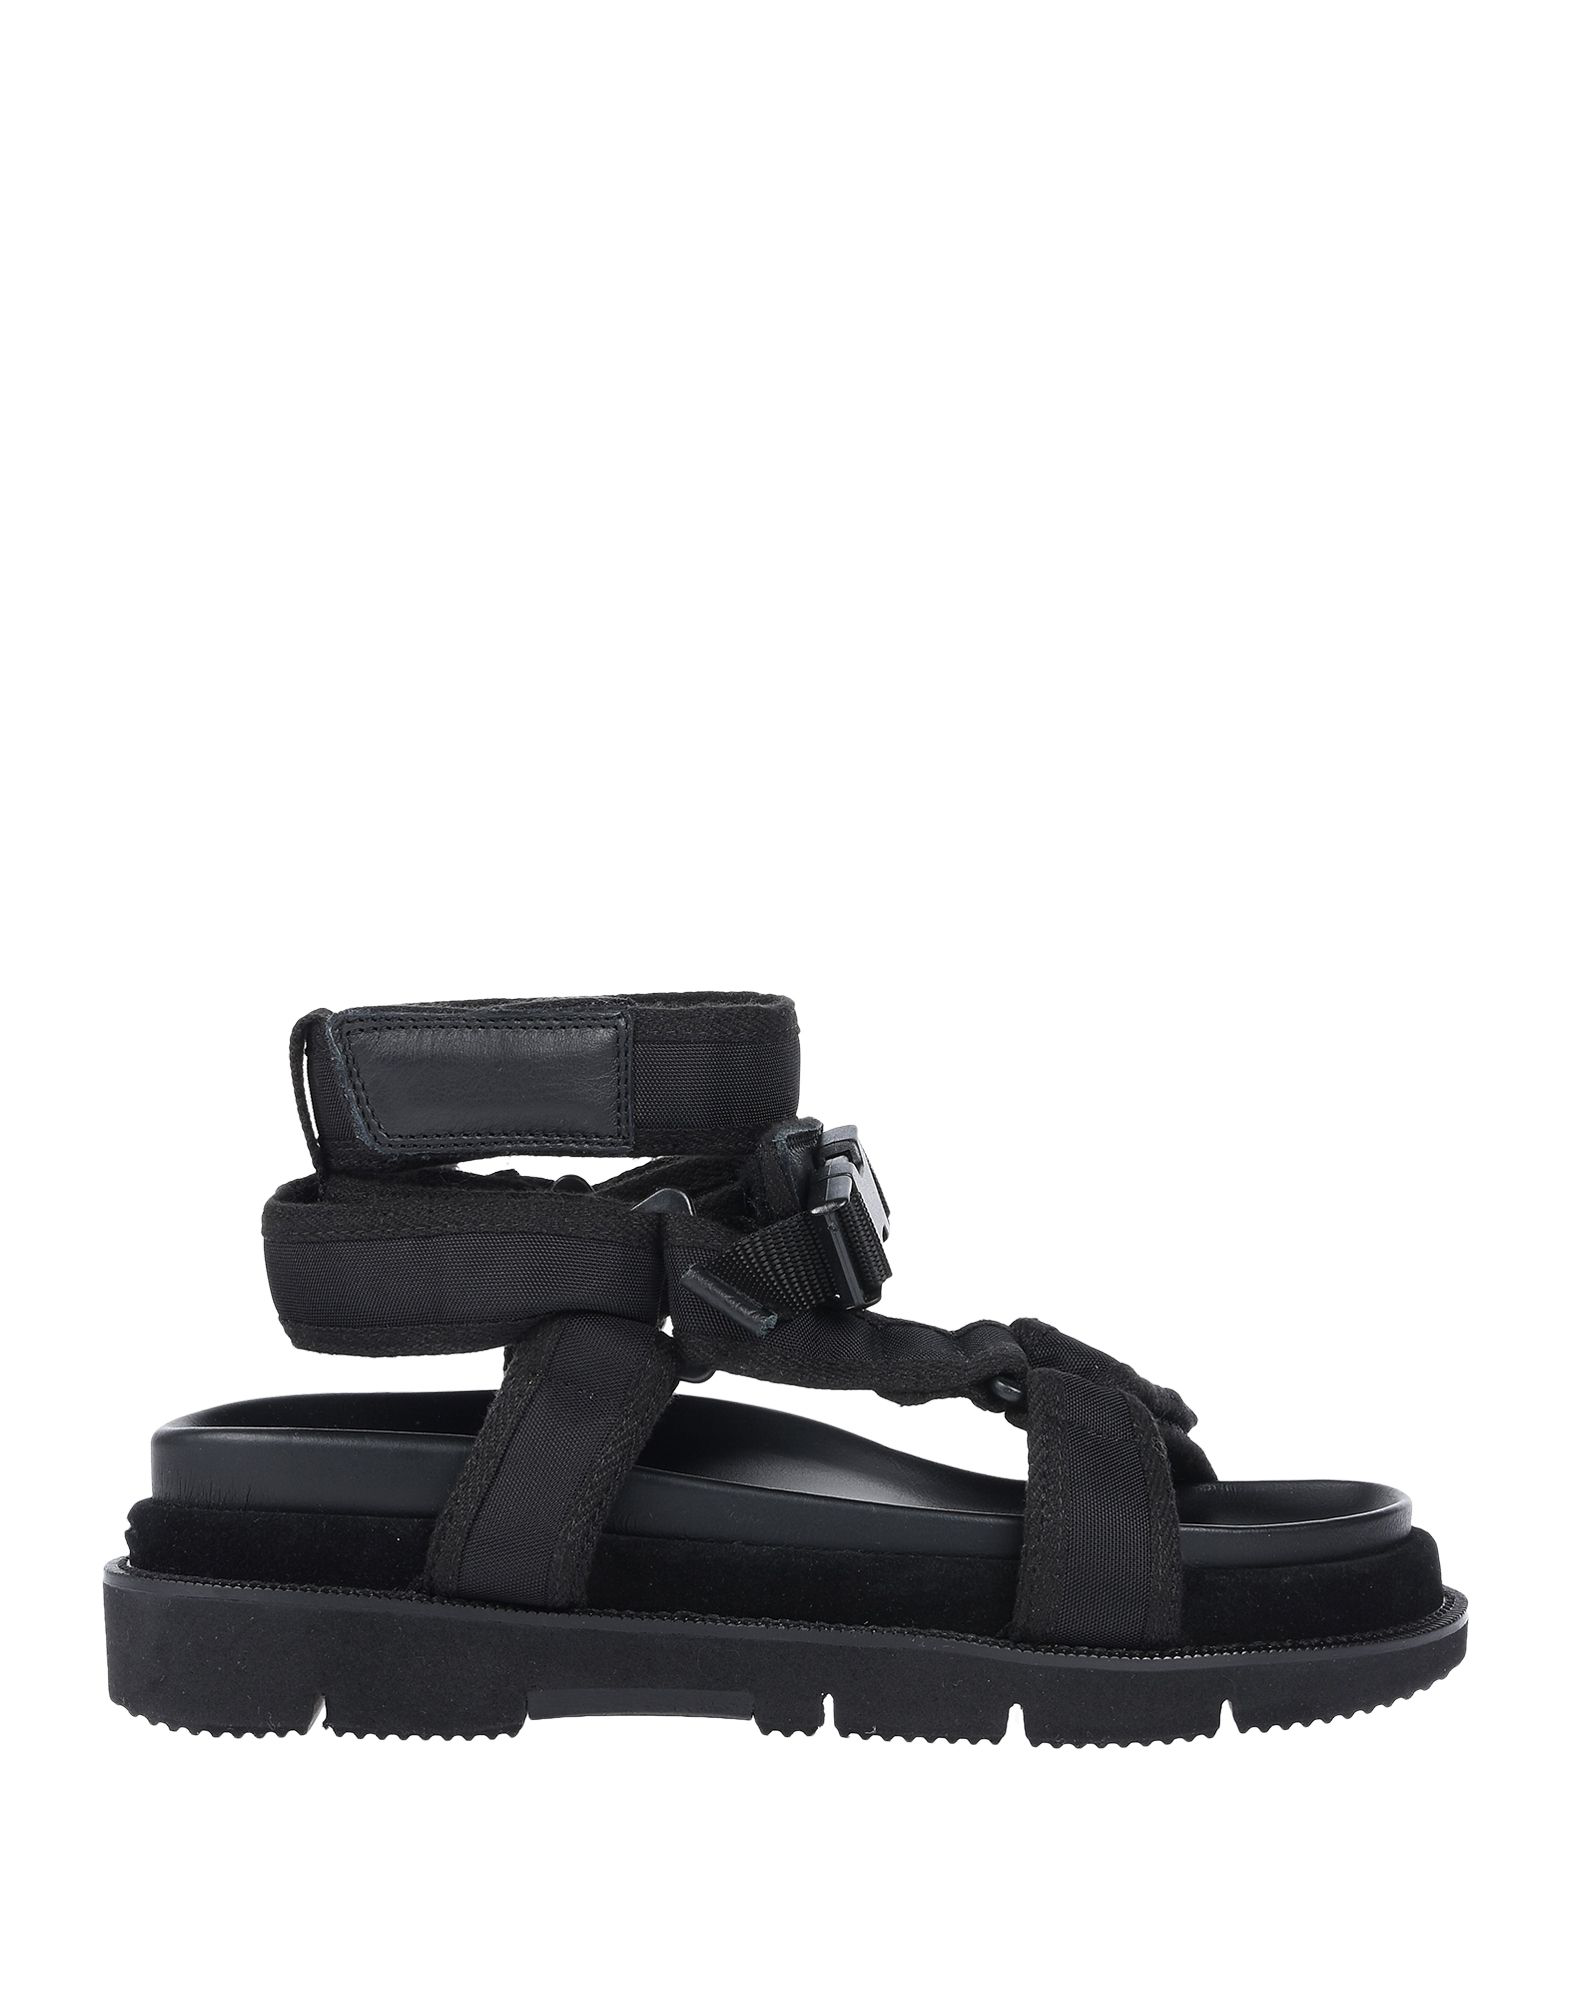 Maison Margiela Sandals In Black | ModeSens